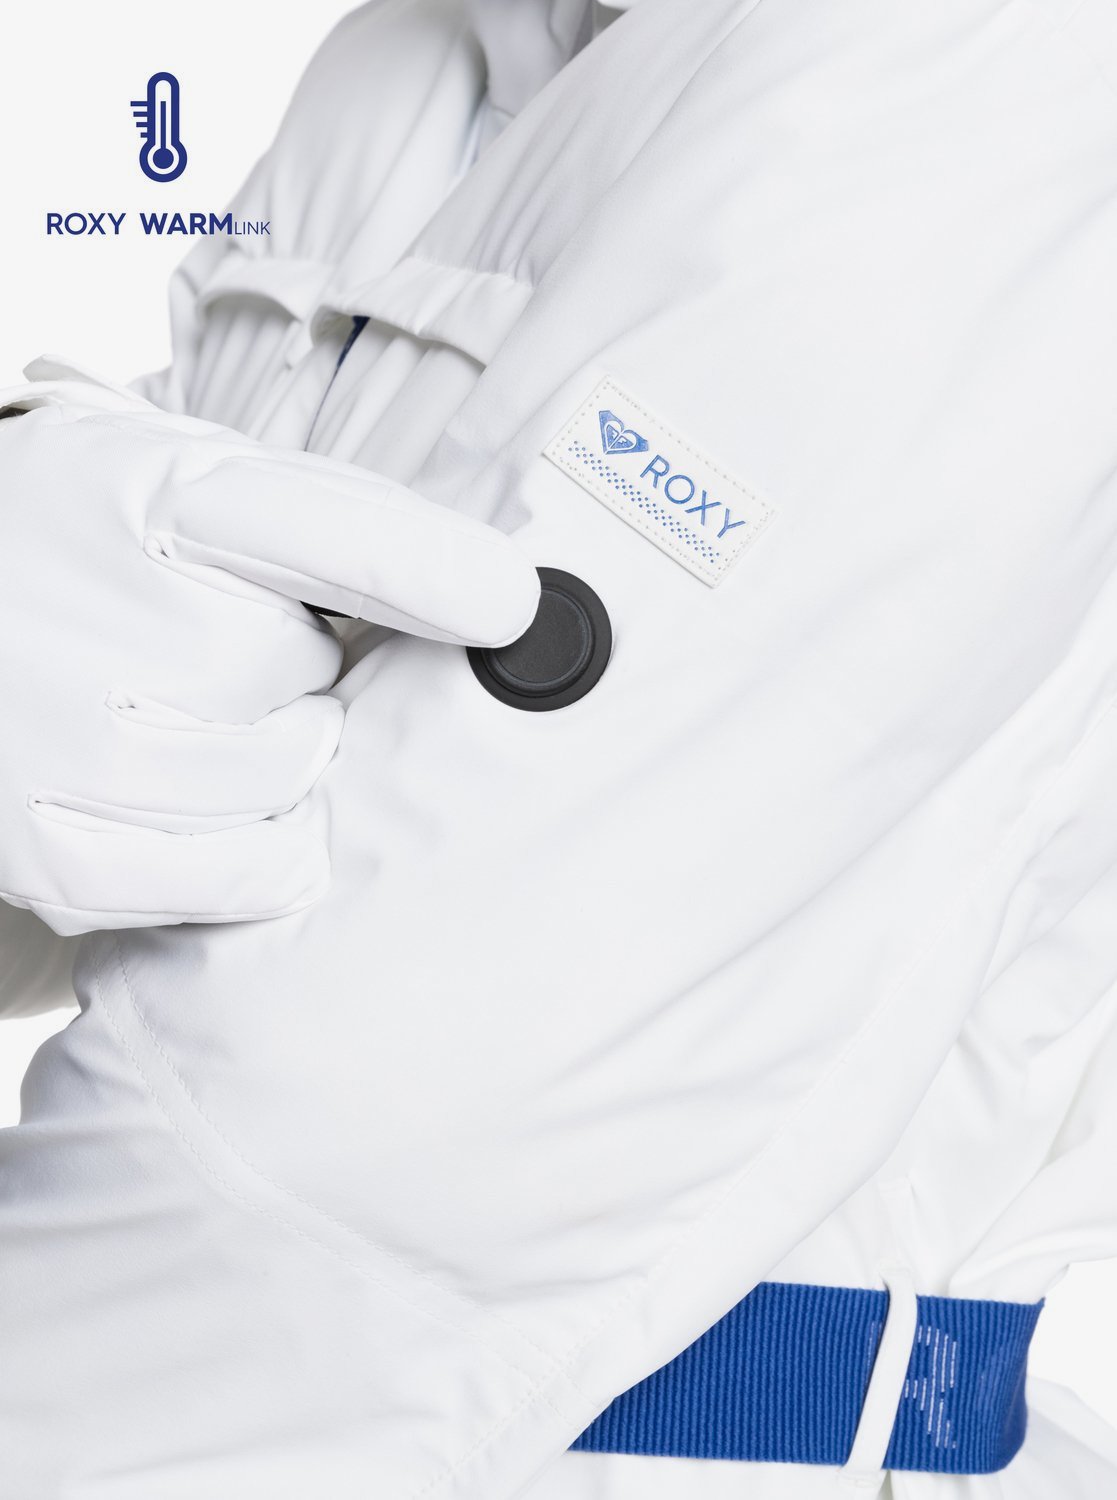 Roxy Women's Premiere Snow Jacket White Heating Tech Close Up View